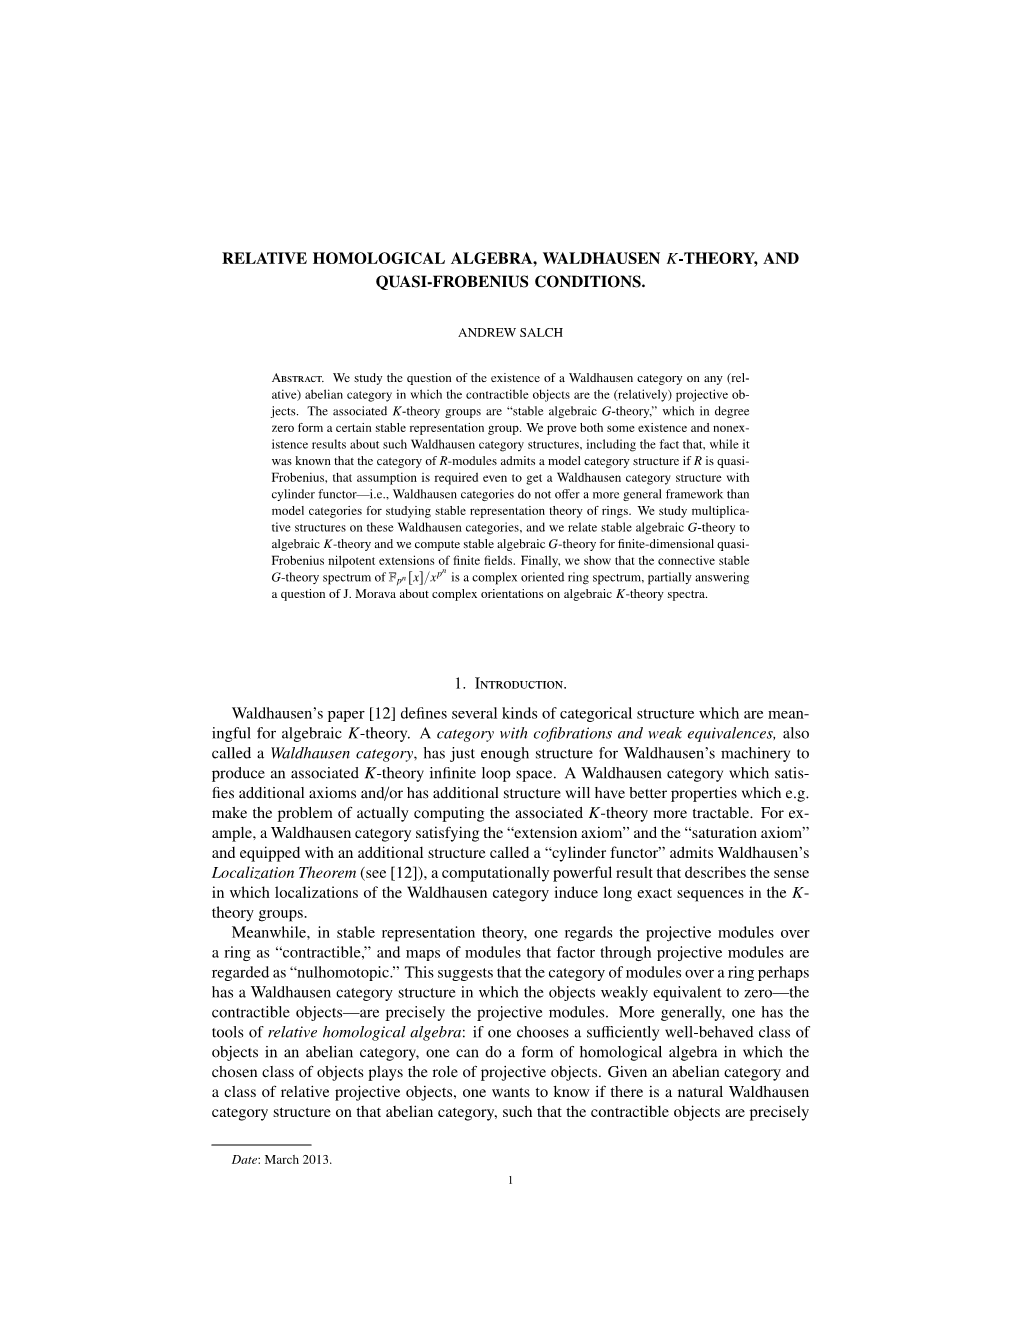 Relative Homological Algebra, Waldhausen K-Theory, and Quasi-Frobenius Conditions